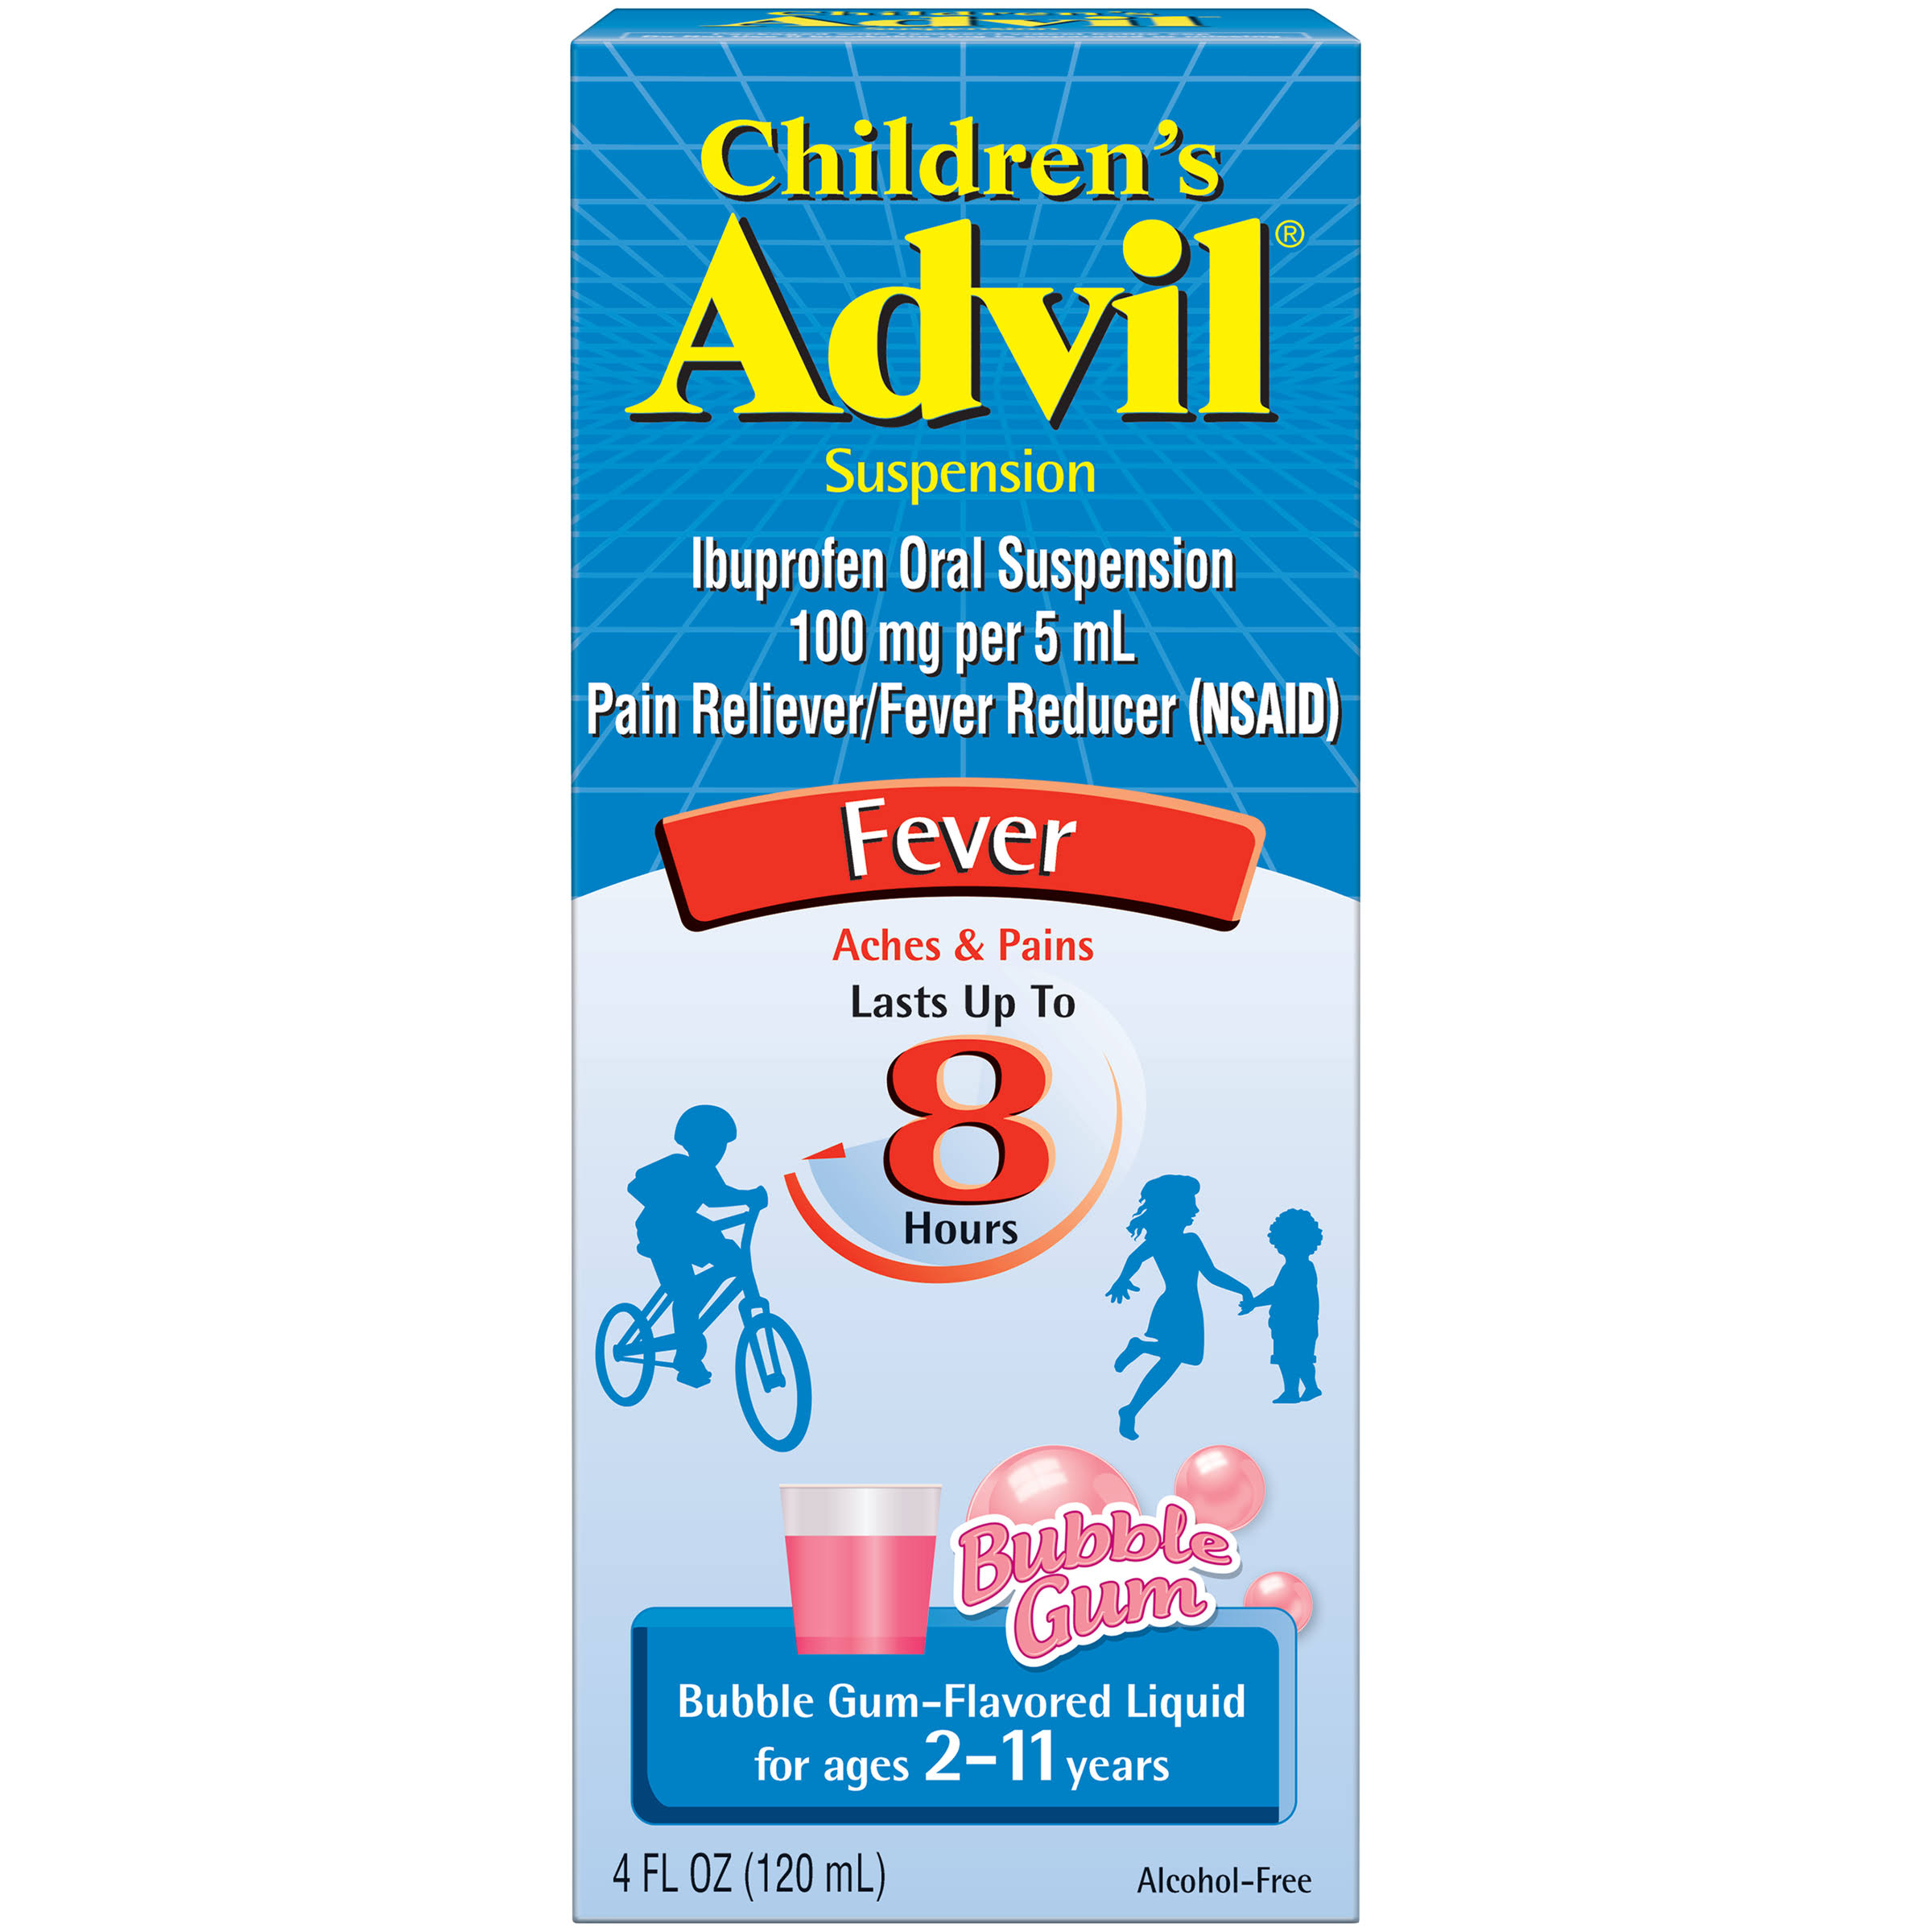 Advil Children's Suspension, 100 mg, Fever, Bubble Gum-Flavored Liquid - 4 fl oz